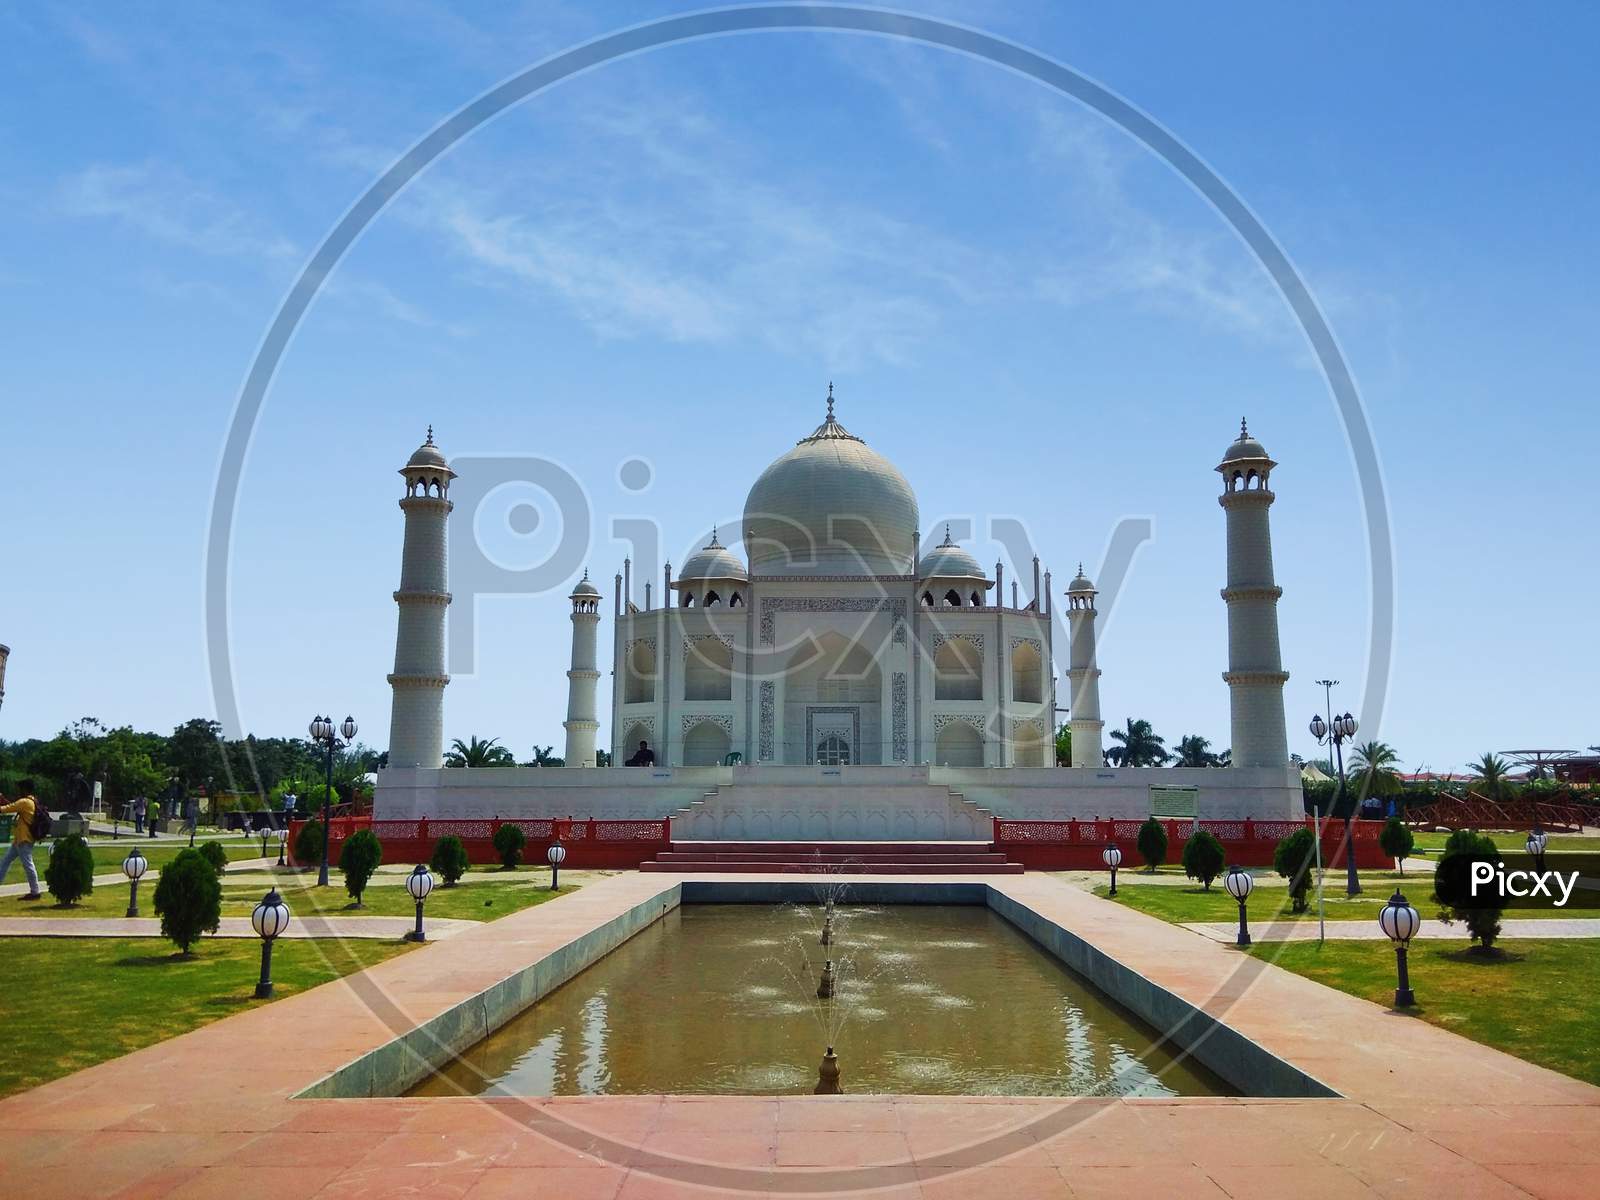 The replica of the Taj Mahal